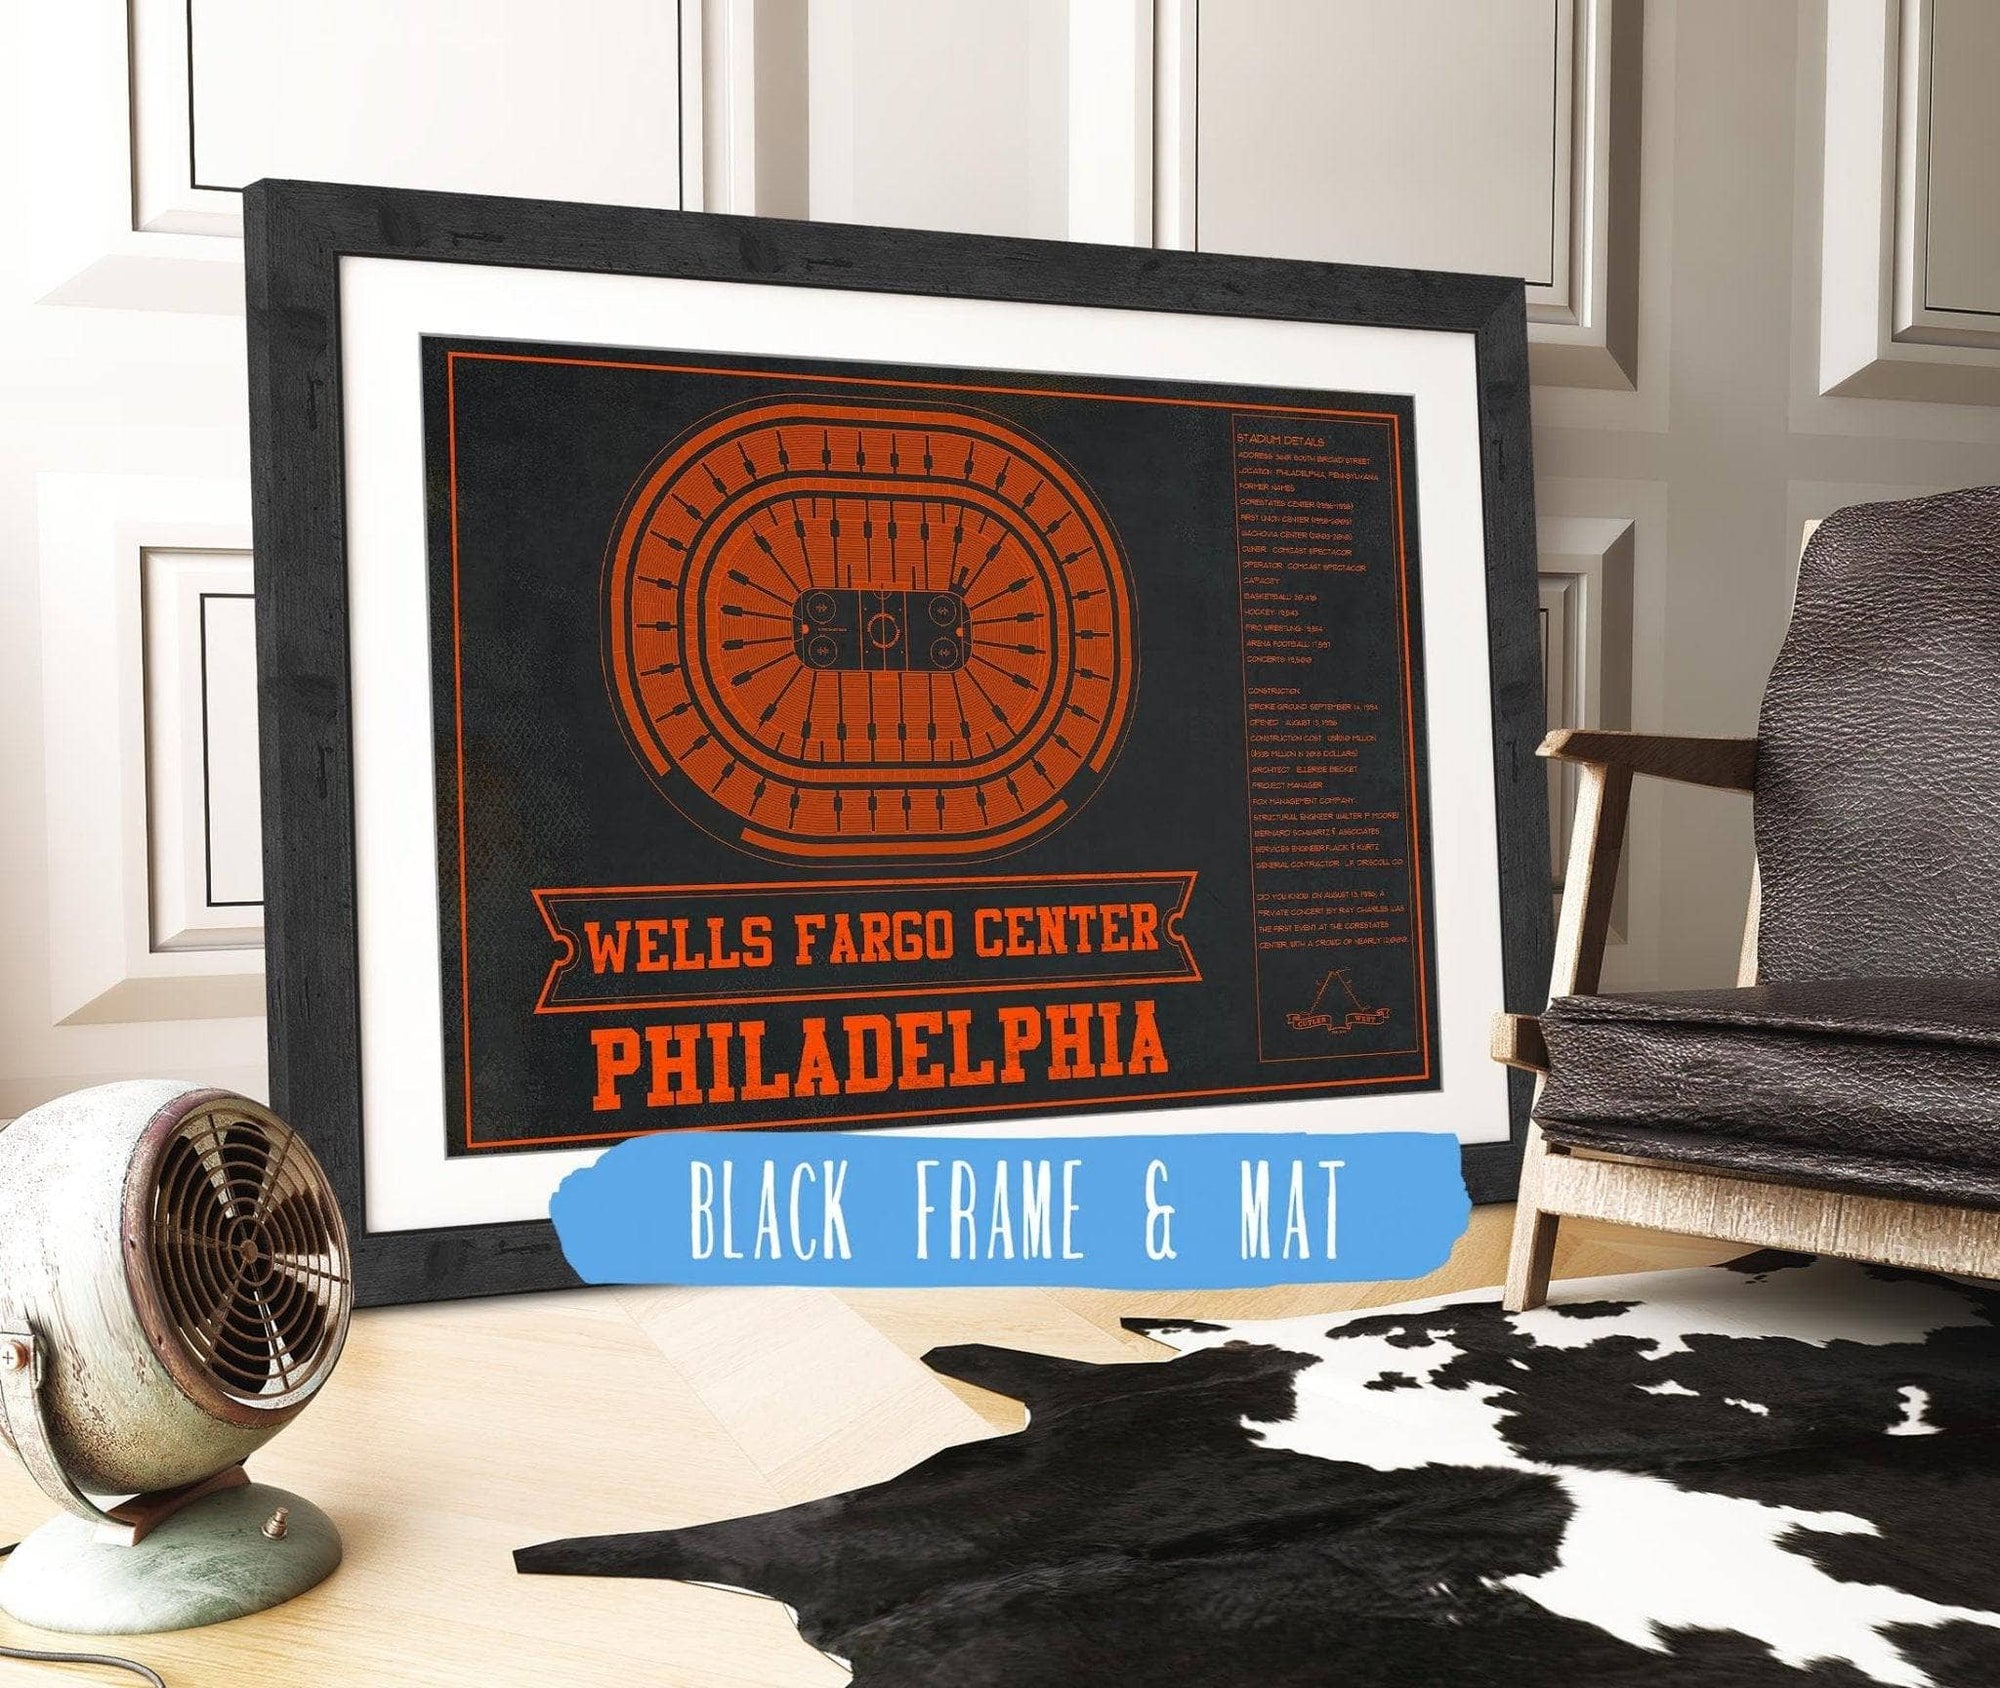 Cutler West 14" x 11" / Black Frame & Mat Philadelphia Flyers Wells Fargo Center Philadelphia Seating Chart - Vintage Hockey Team Color Print 944343983-TOP